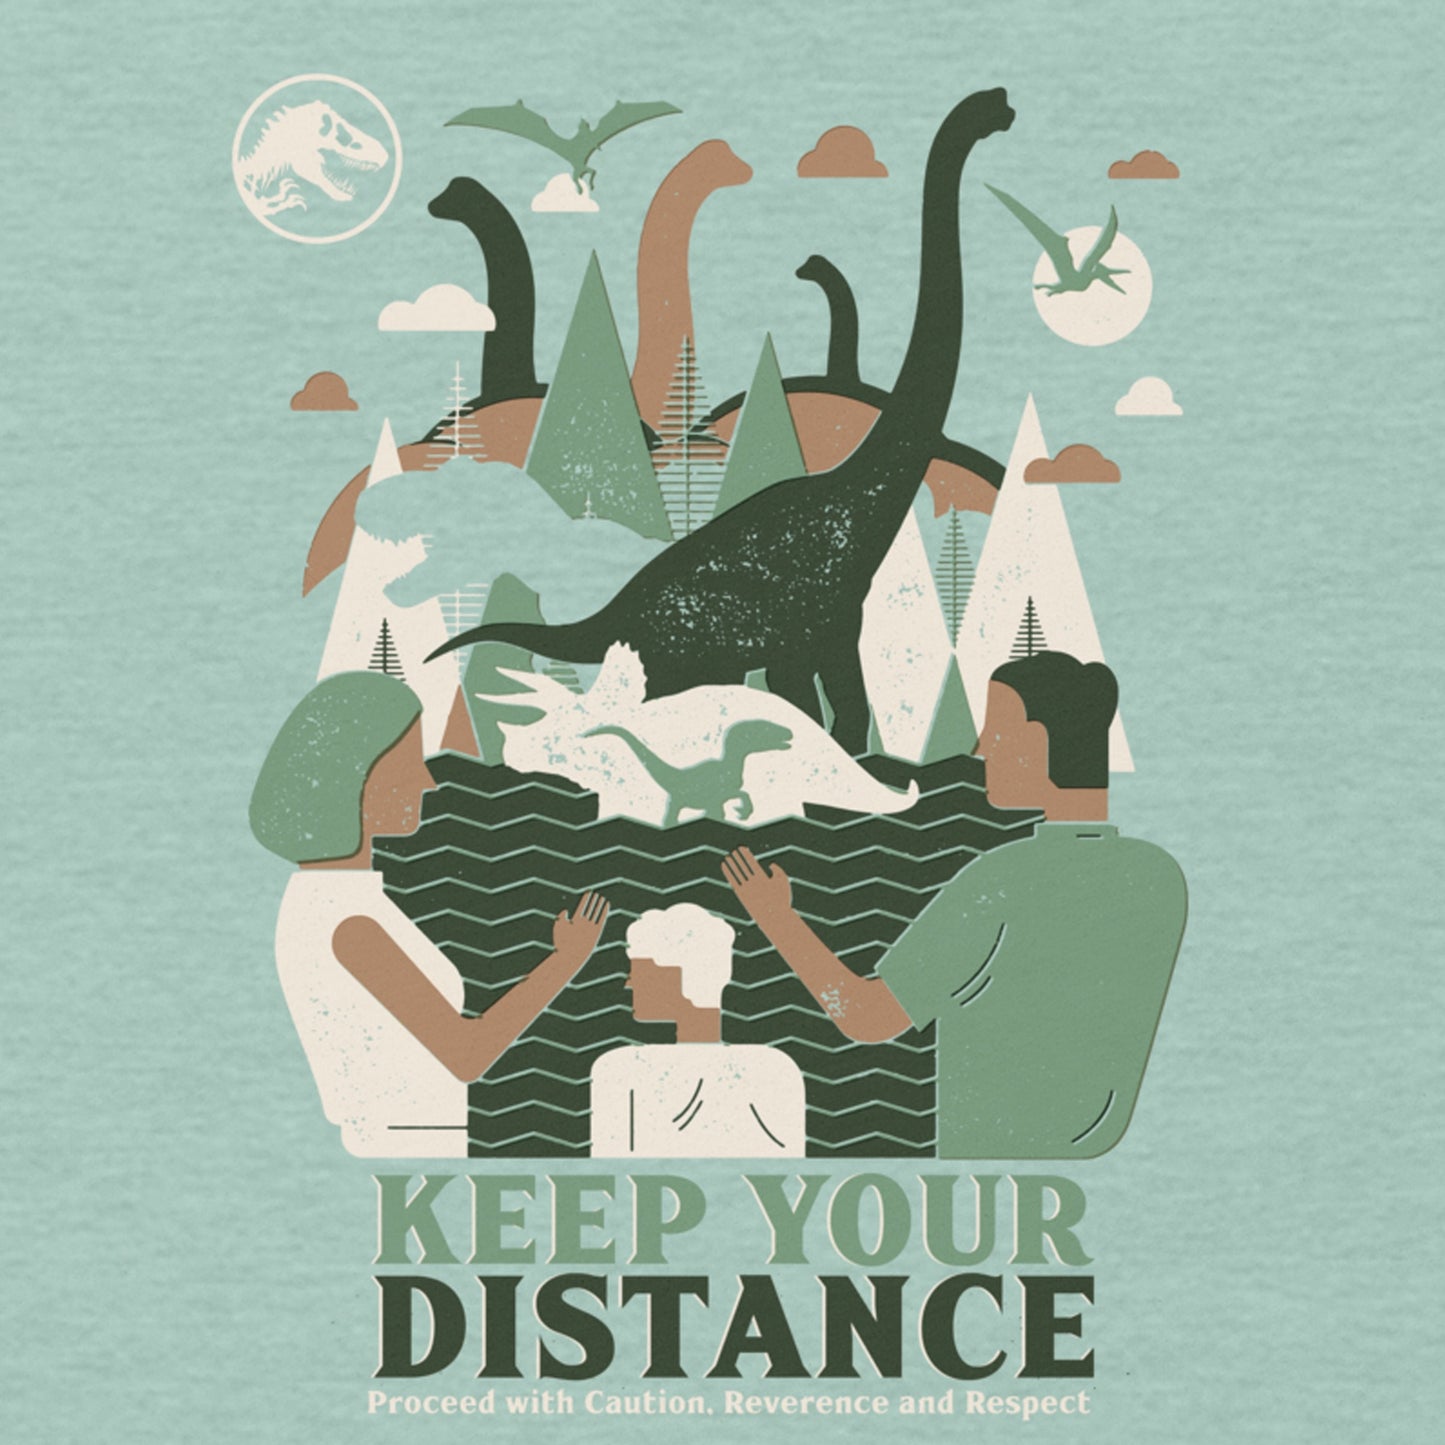 Jurassic Park National Parks Keep Your Distance Unisex T-Shirt